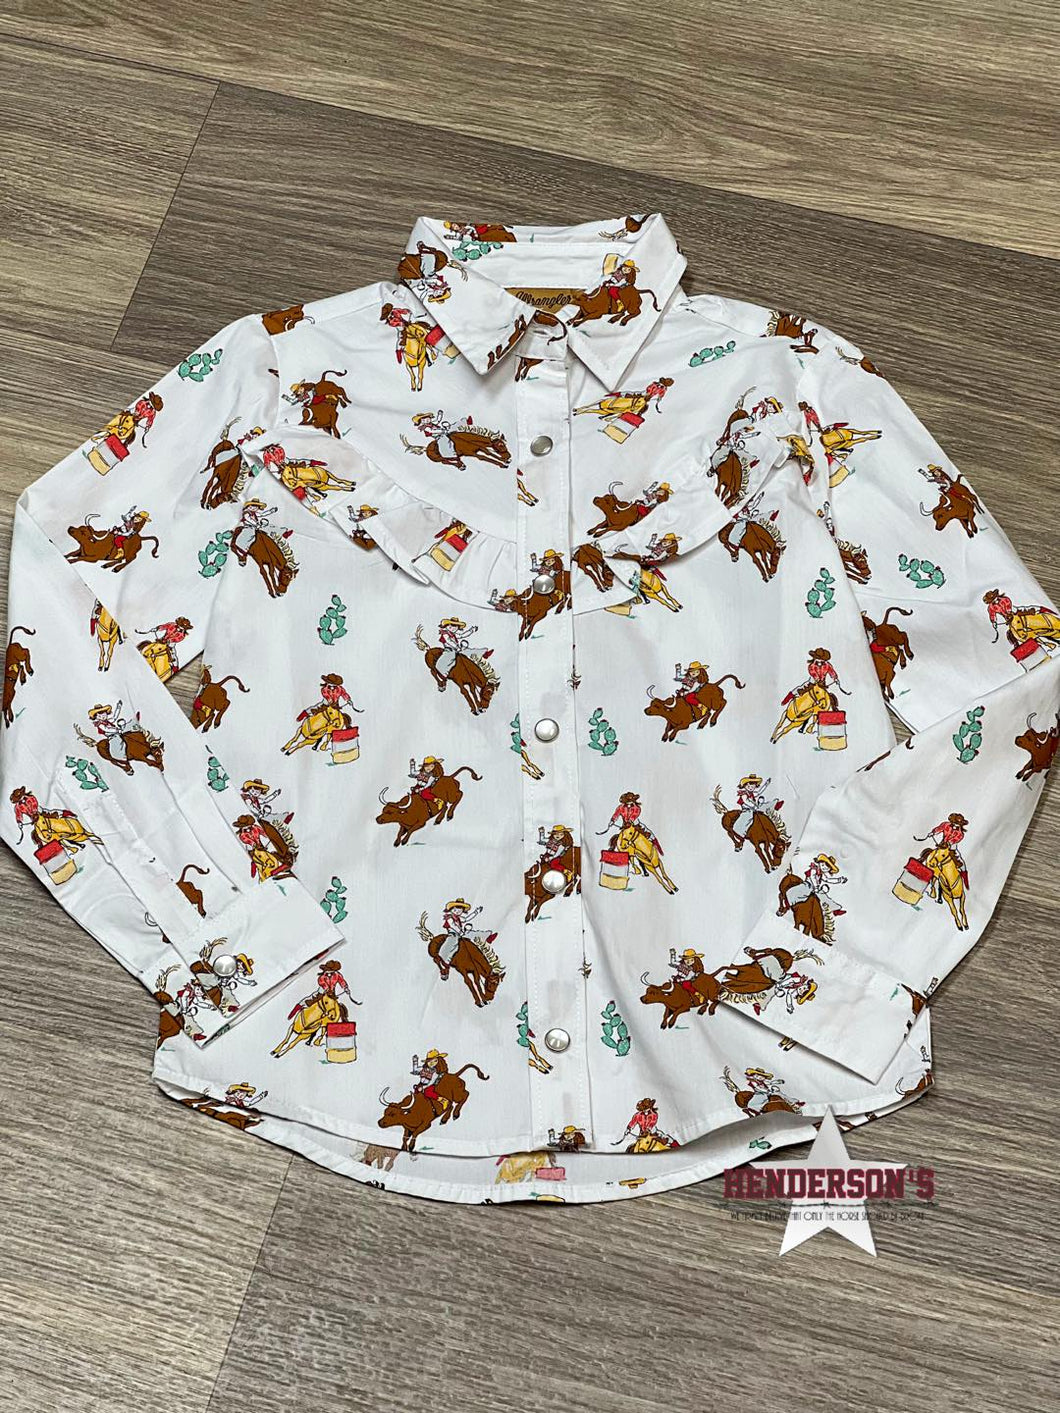 Girl's Wrangler Western Shirt ~ Cowgirl Print - Henderson's Western Store